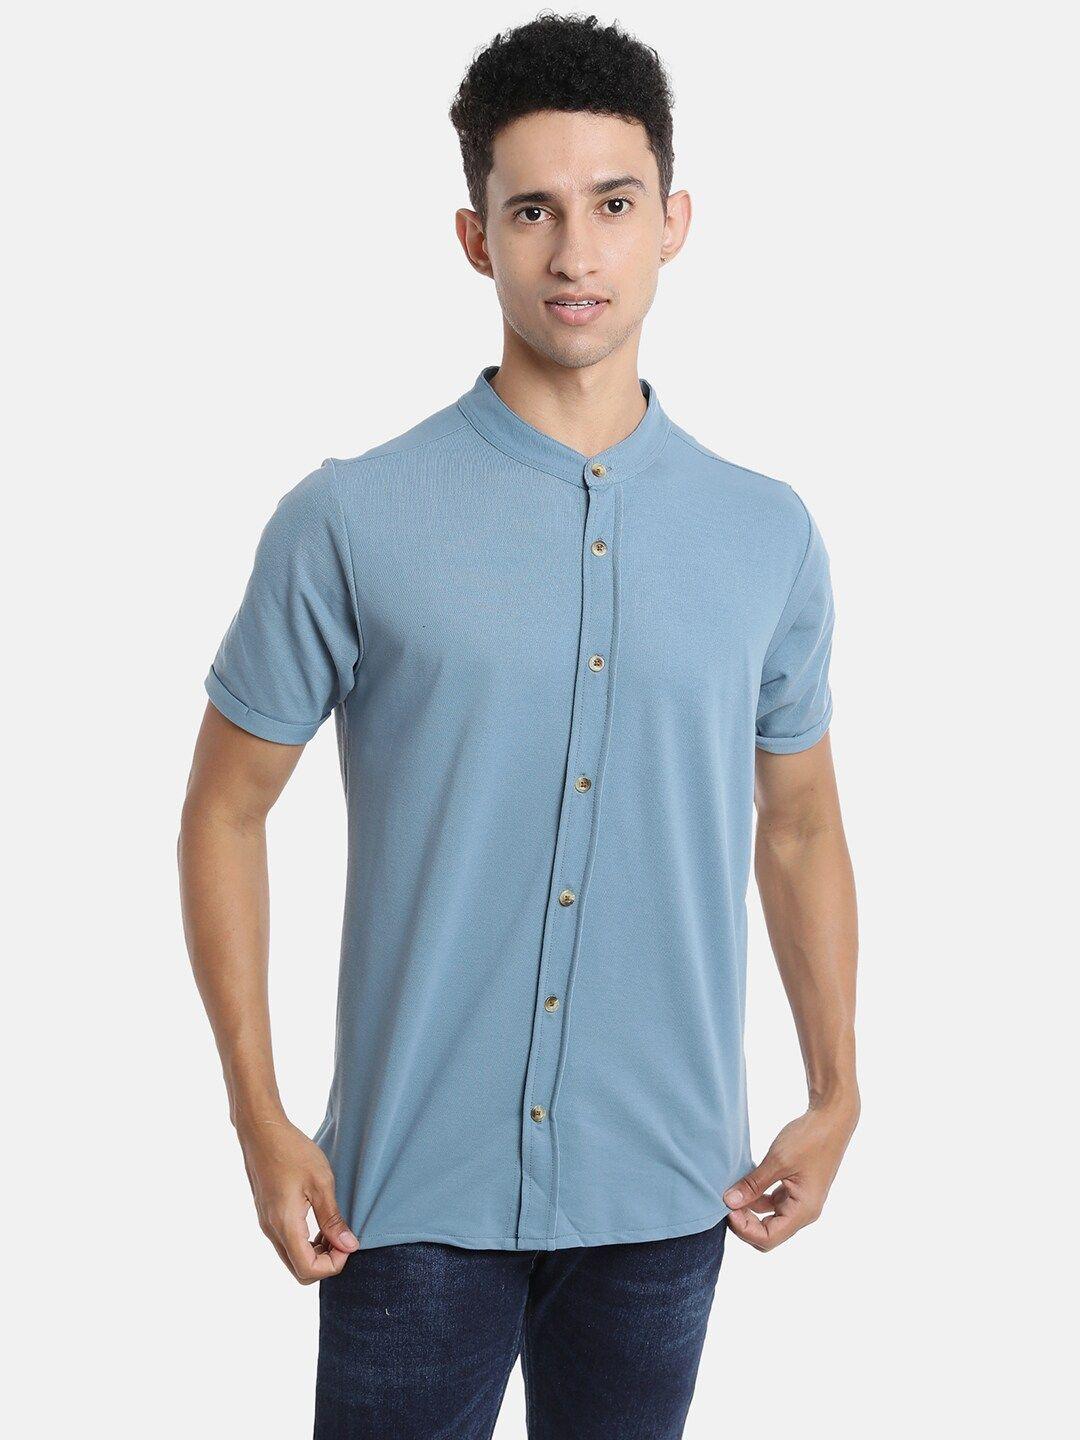 campus sutra men blue solid classic regular fit casual shirt